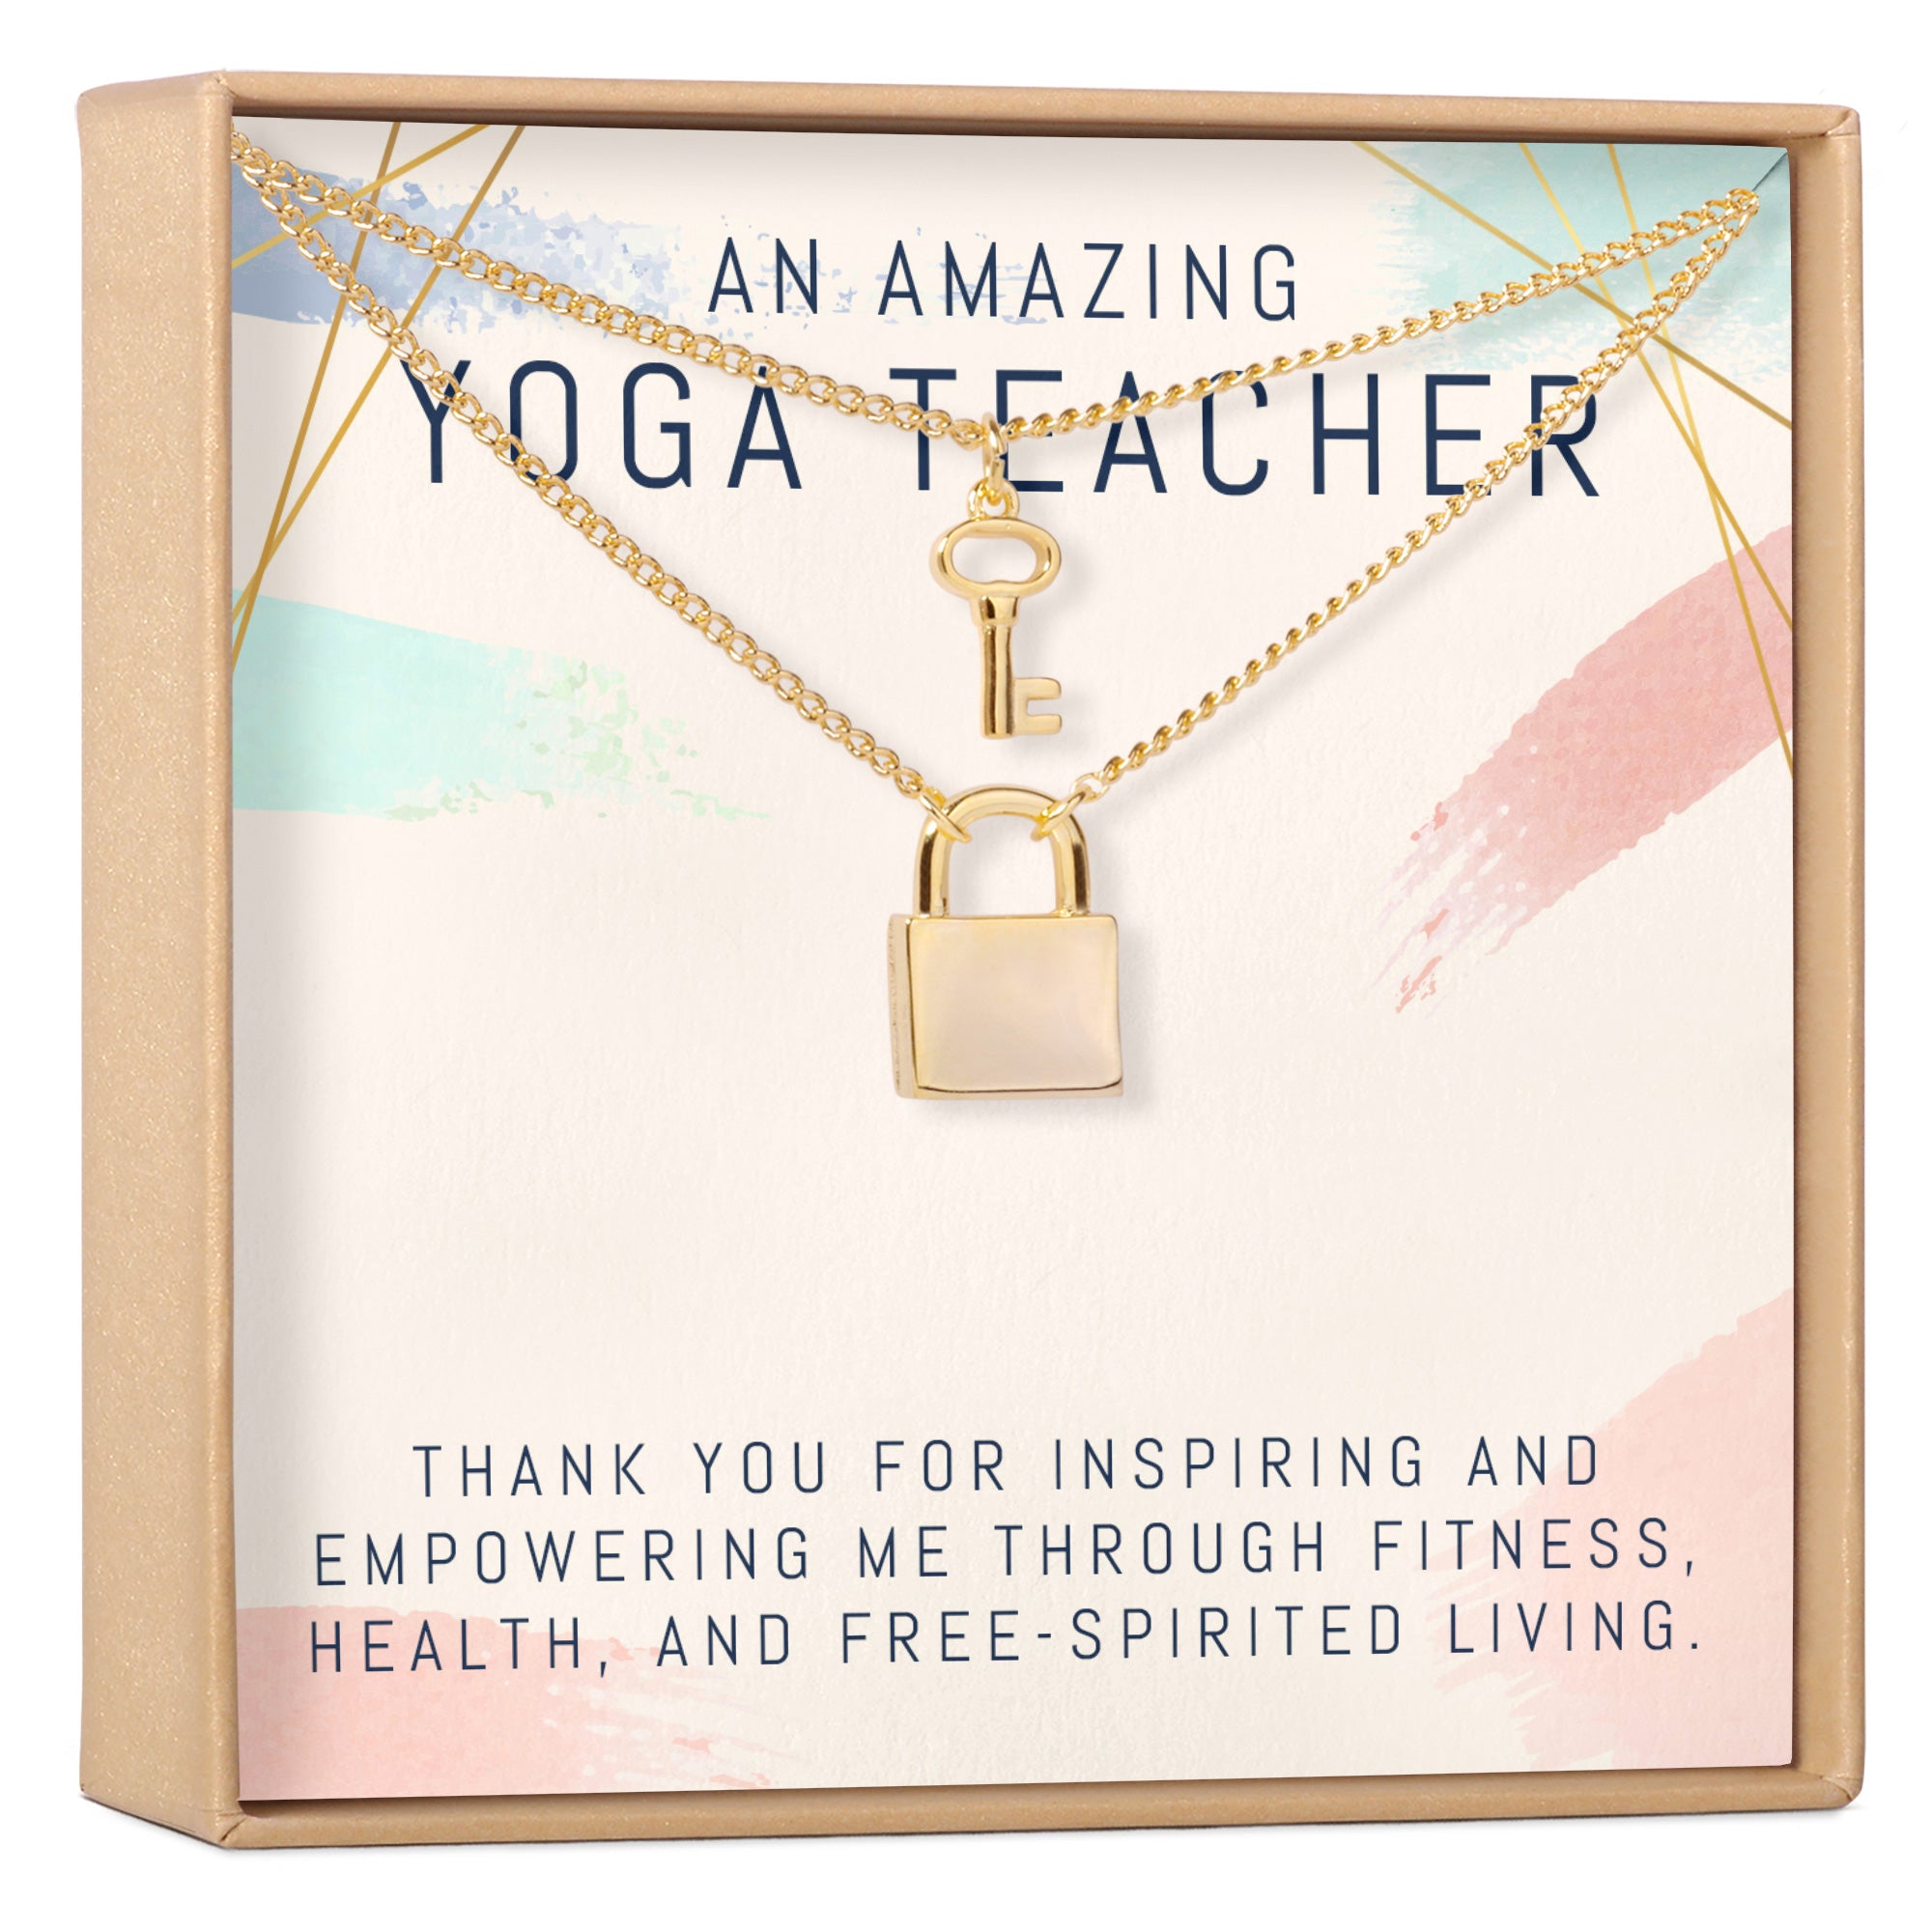 Yoga Teacher Gift: An Appreciation Thank You, Retirement, or Going